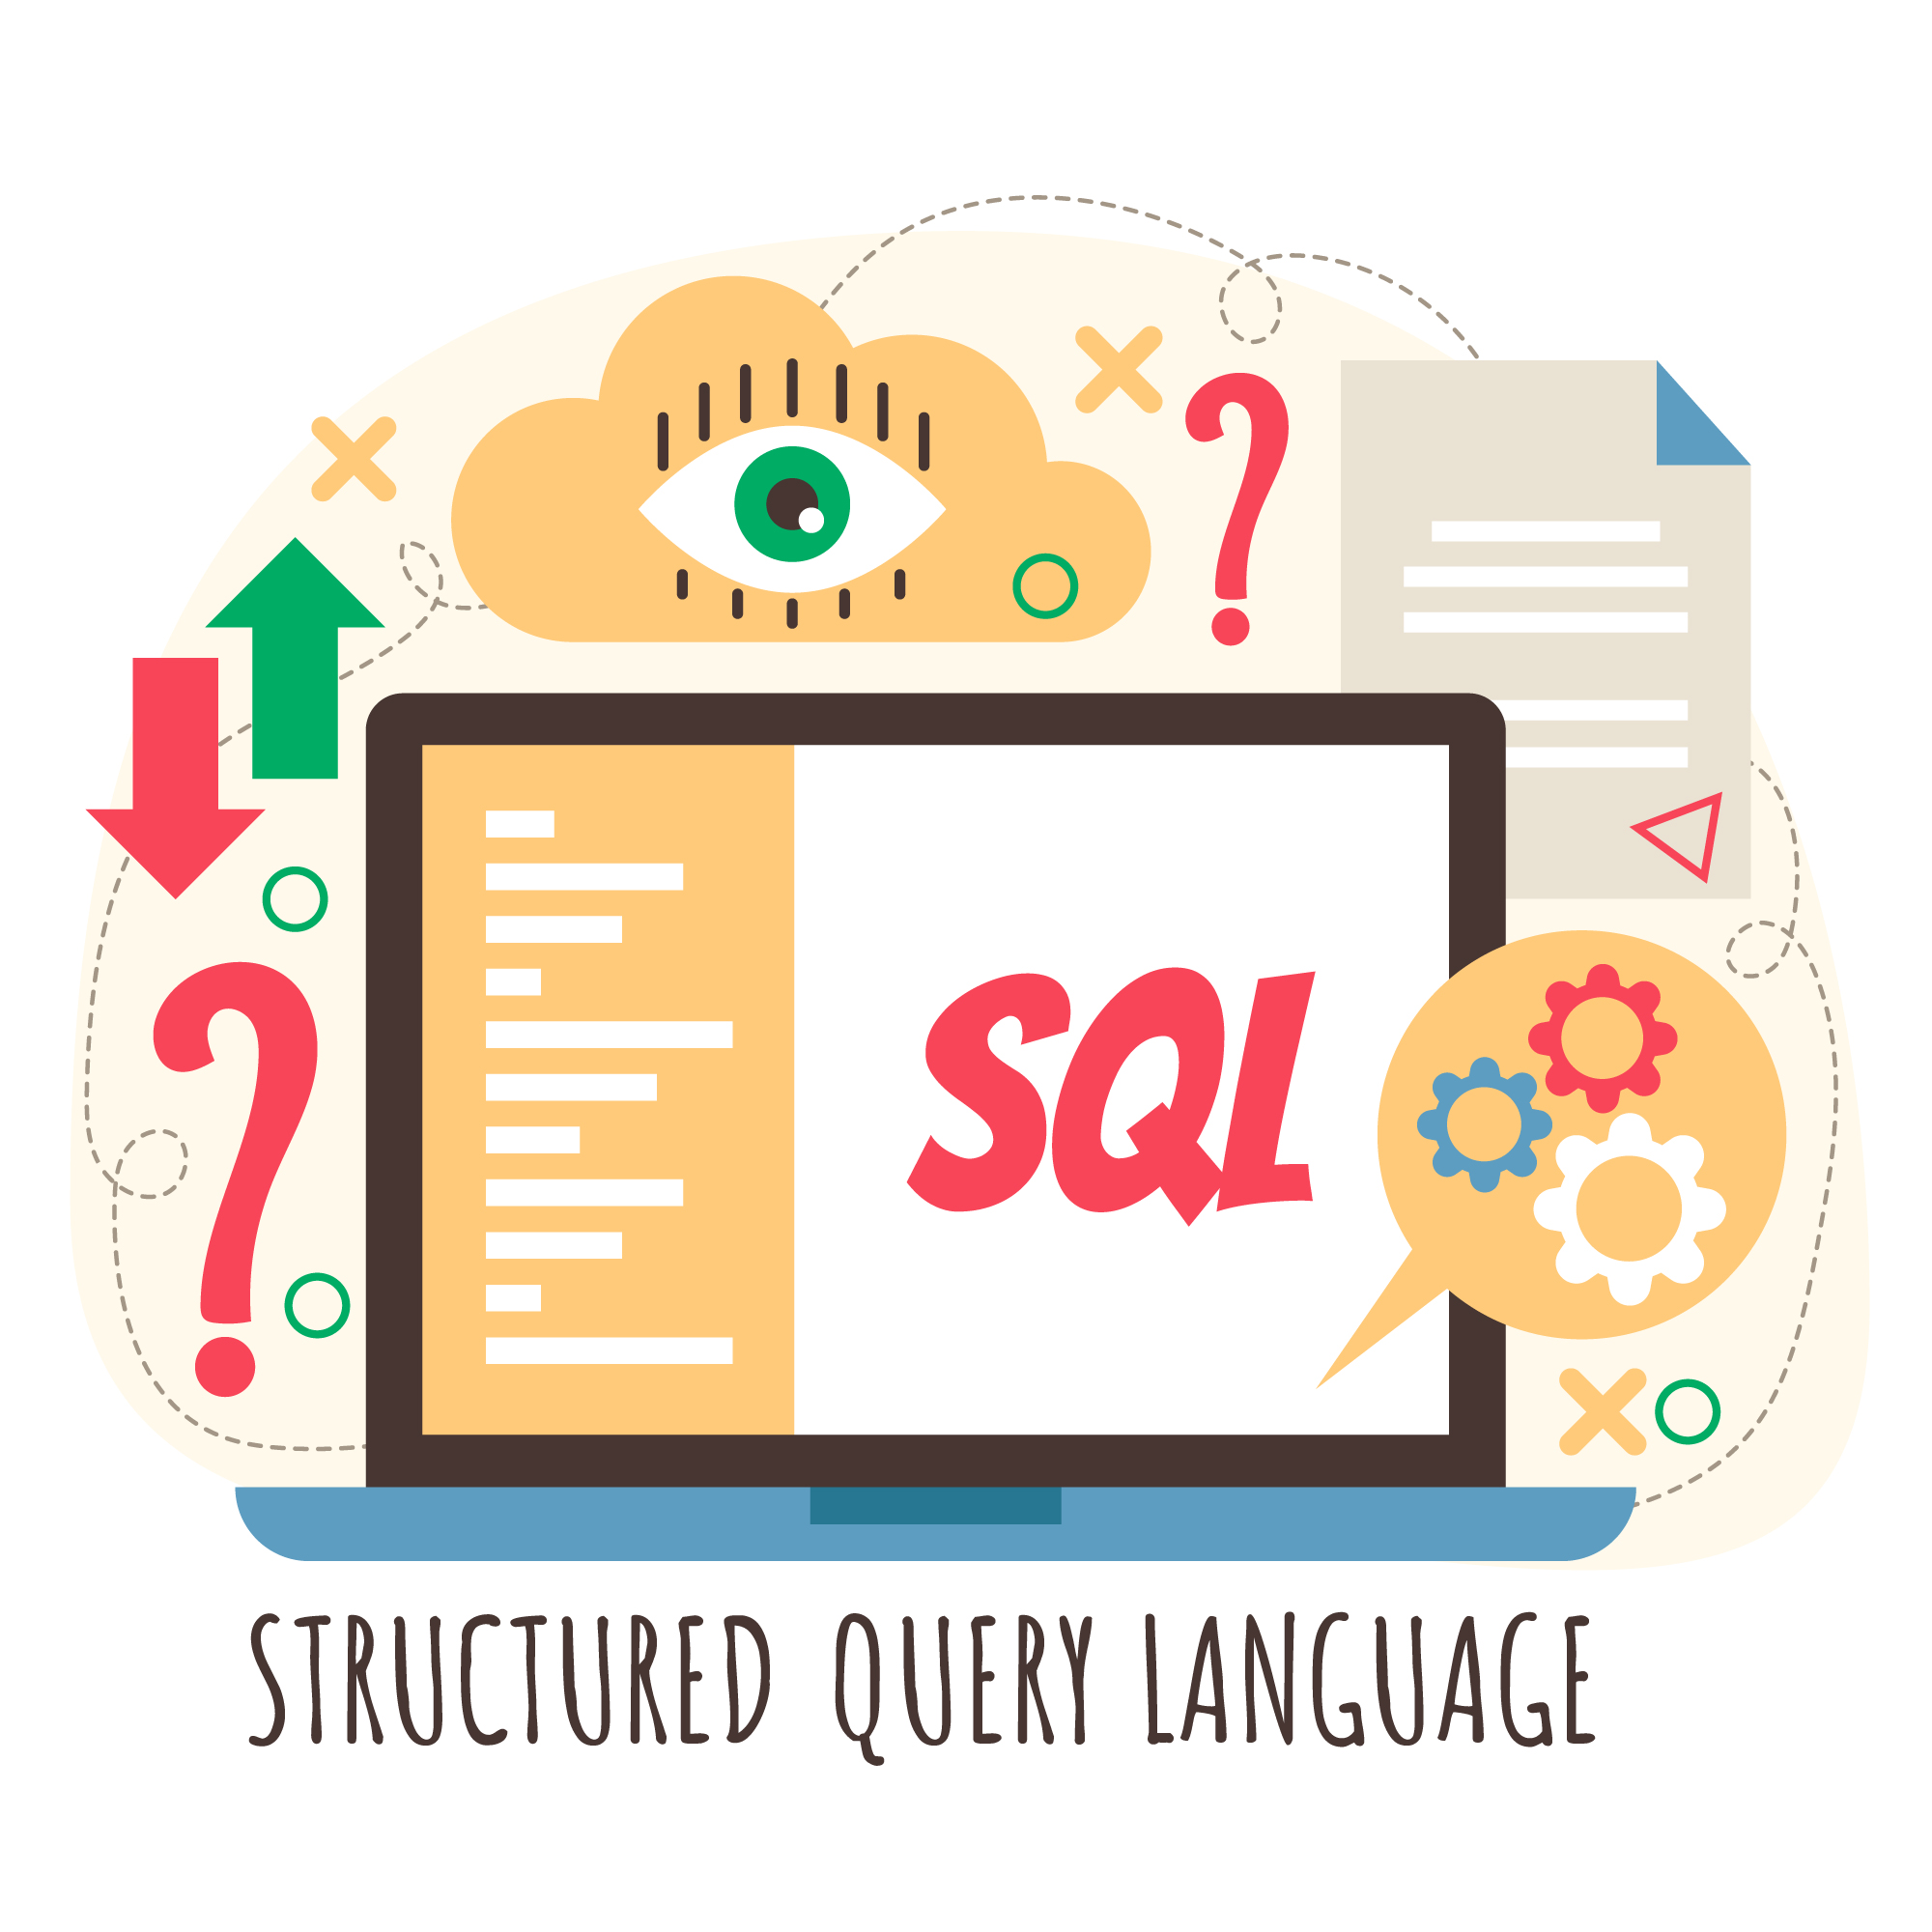 COALESCE in SQL – Understanding the Function from Scratch